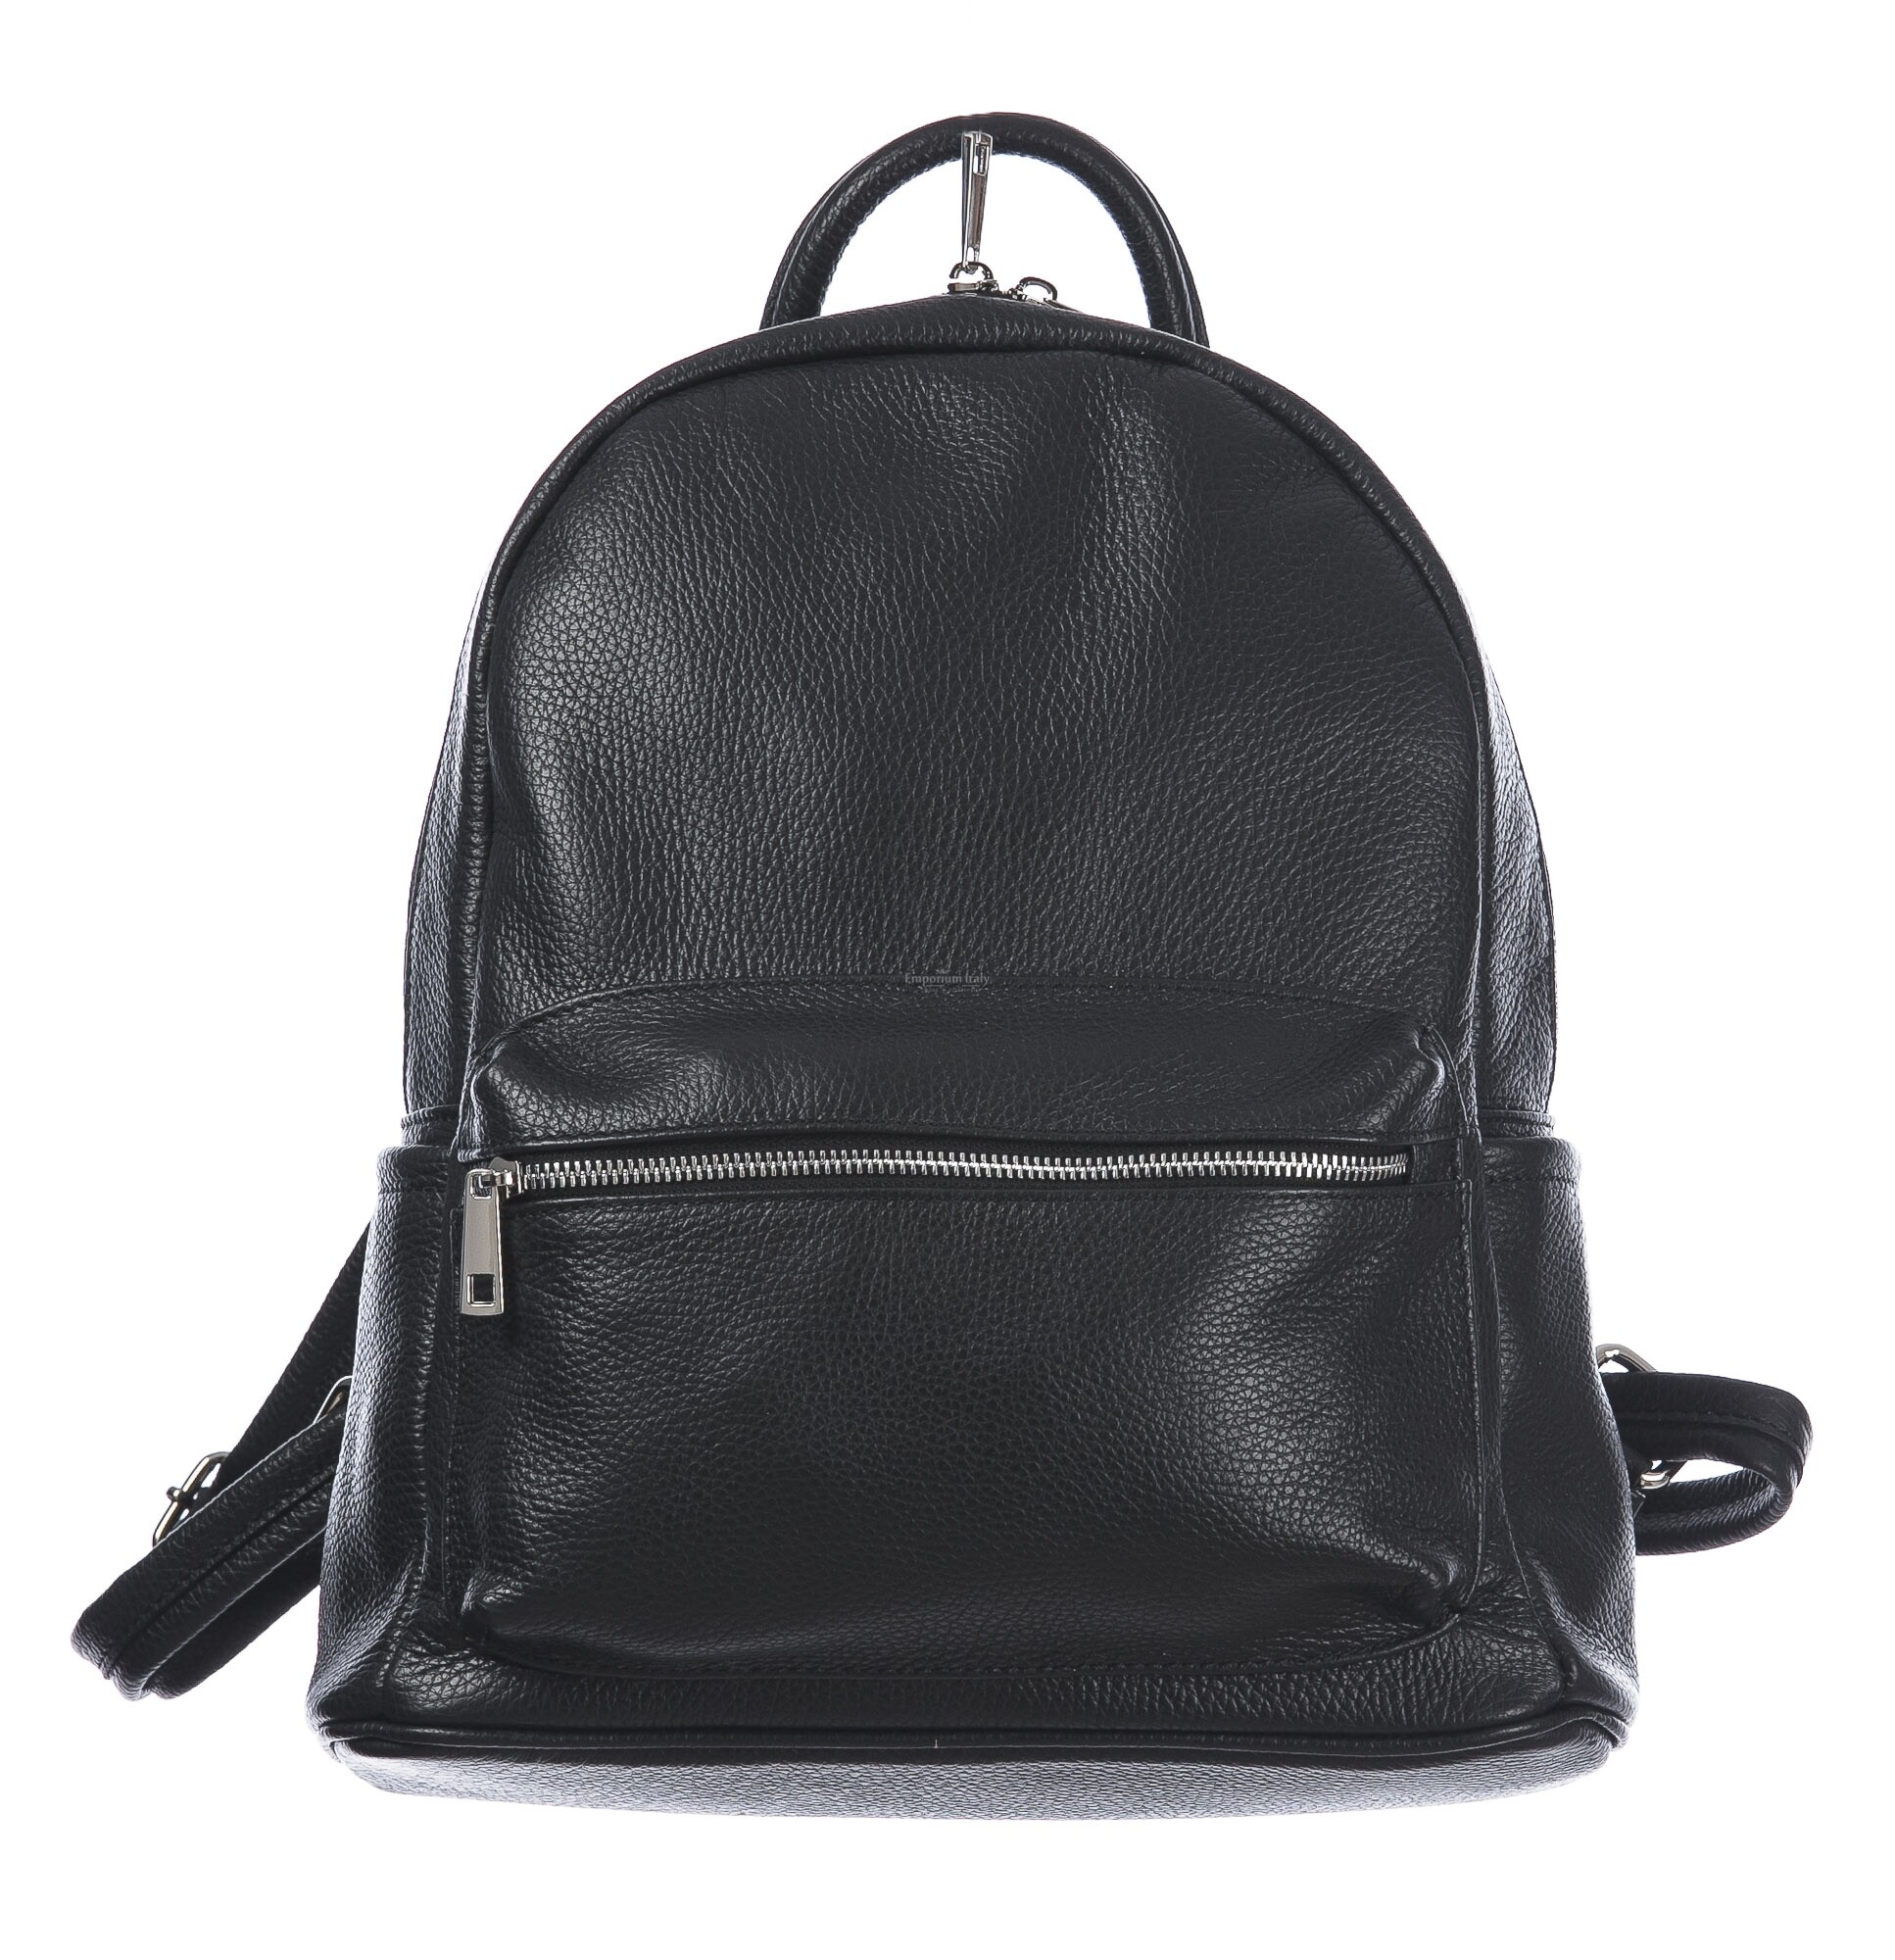 Genuine leather backpack for woman BERNINA , BLACK, CHIAROSCURO, MADE ...